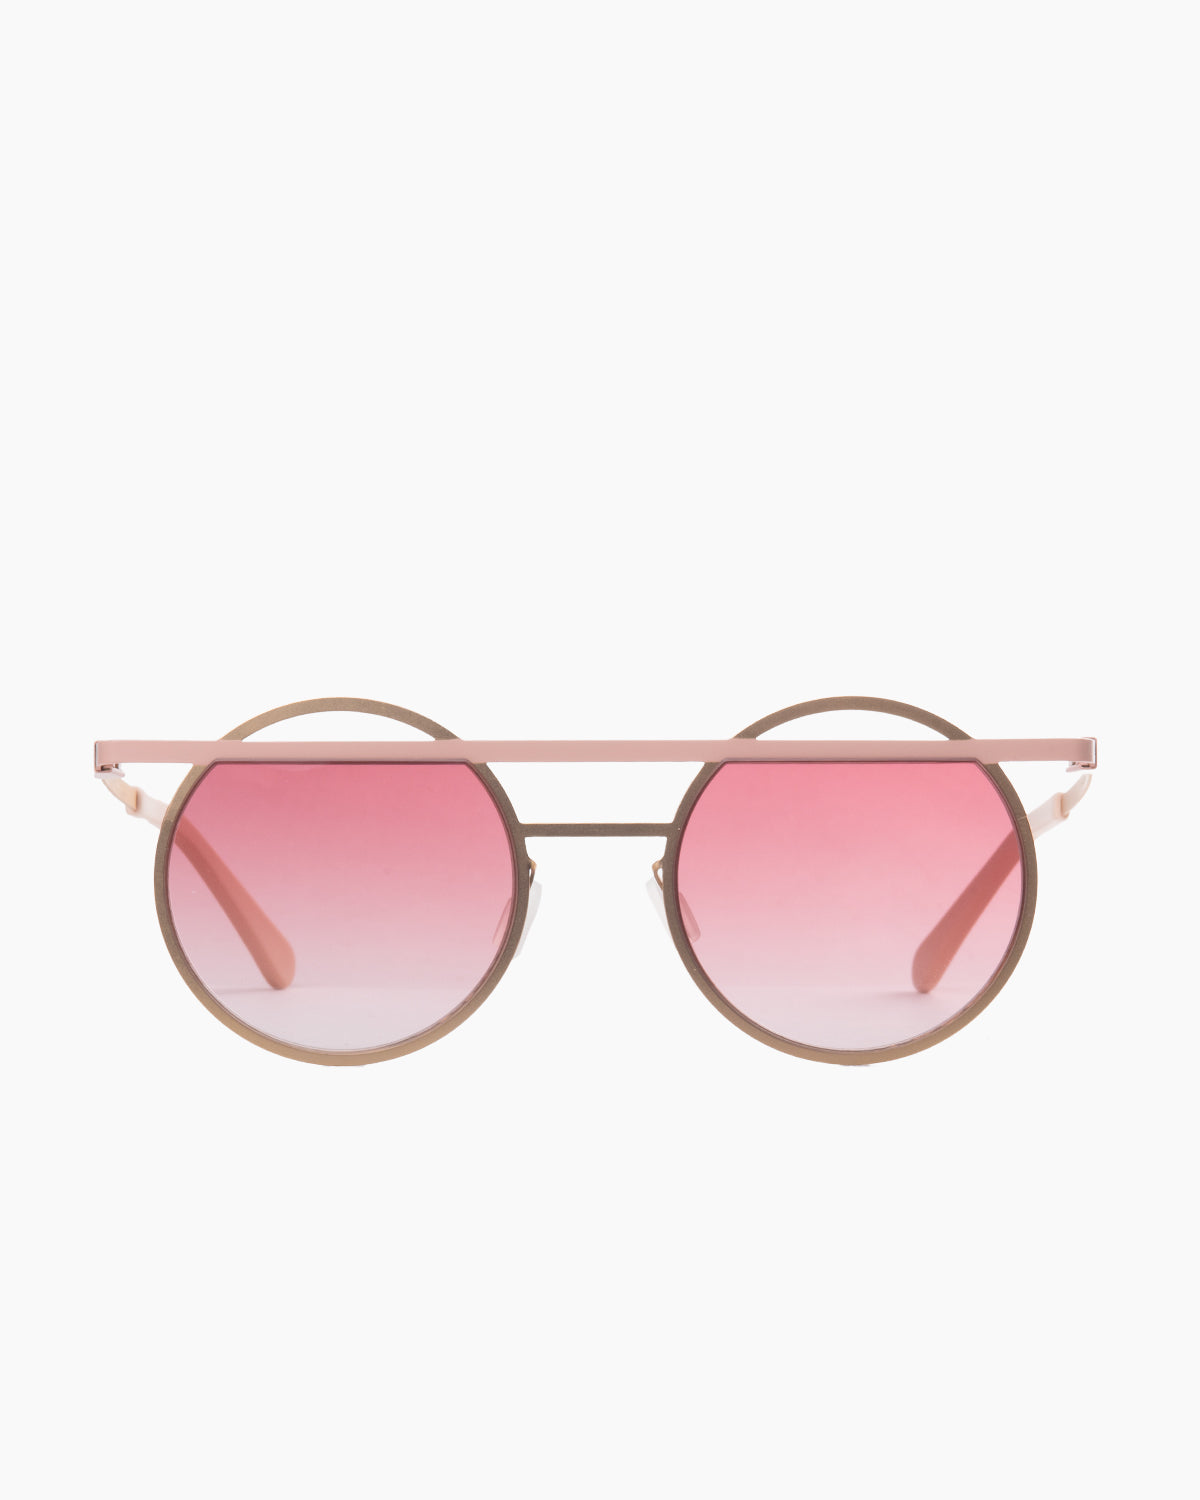 Gamine - NorrebroS - Gold/Pink | Bar à lunettes:  Marie-Sophie Dion